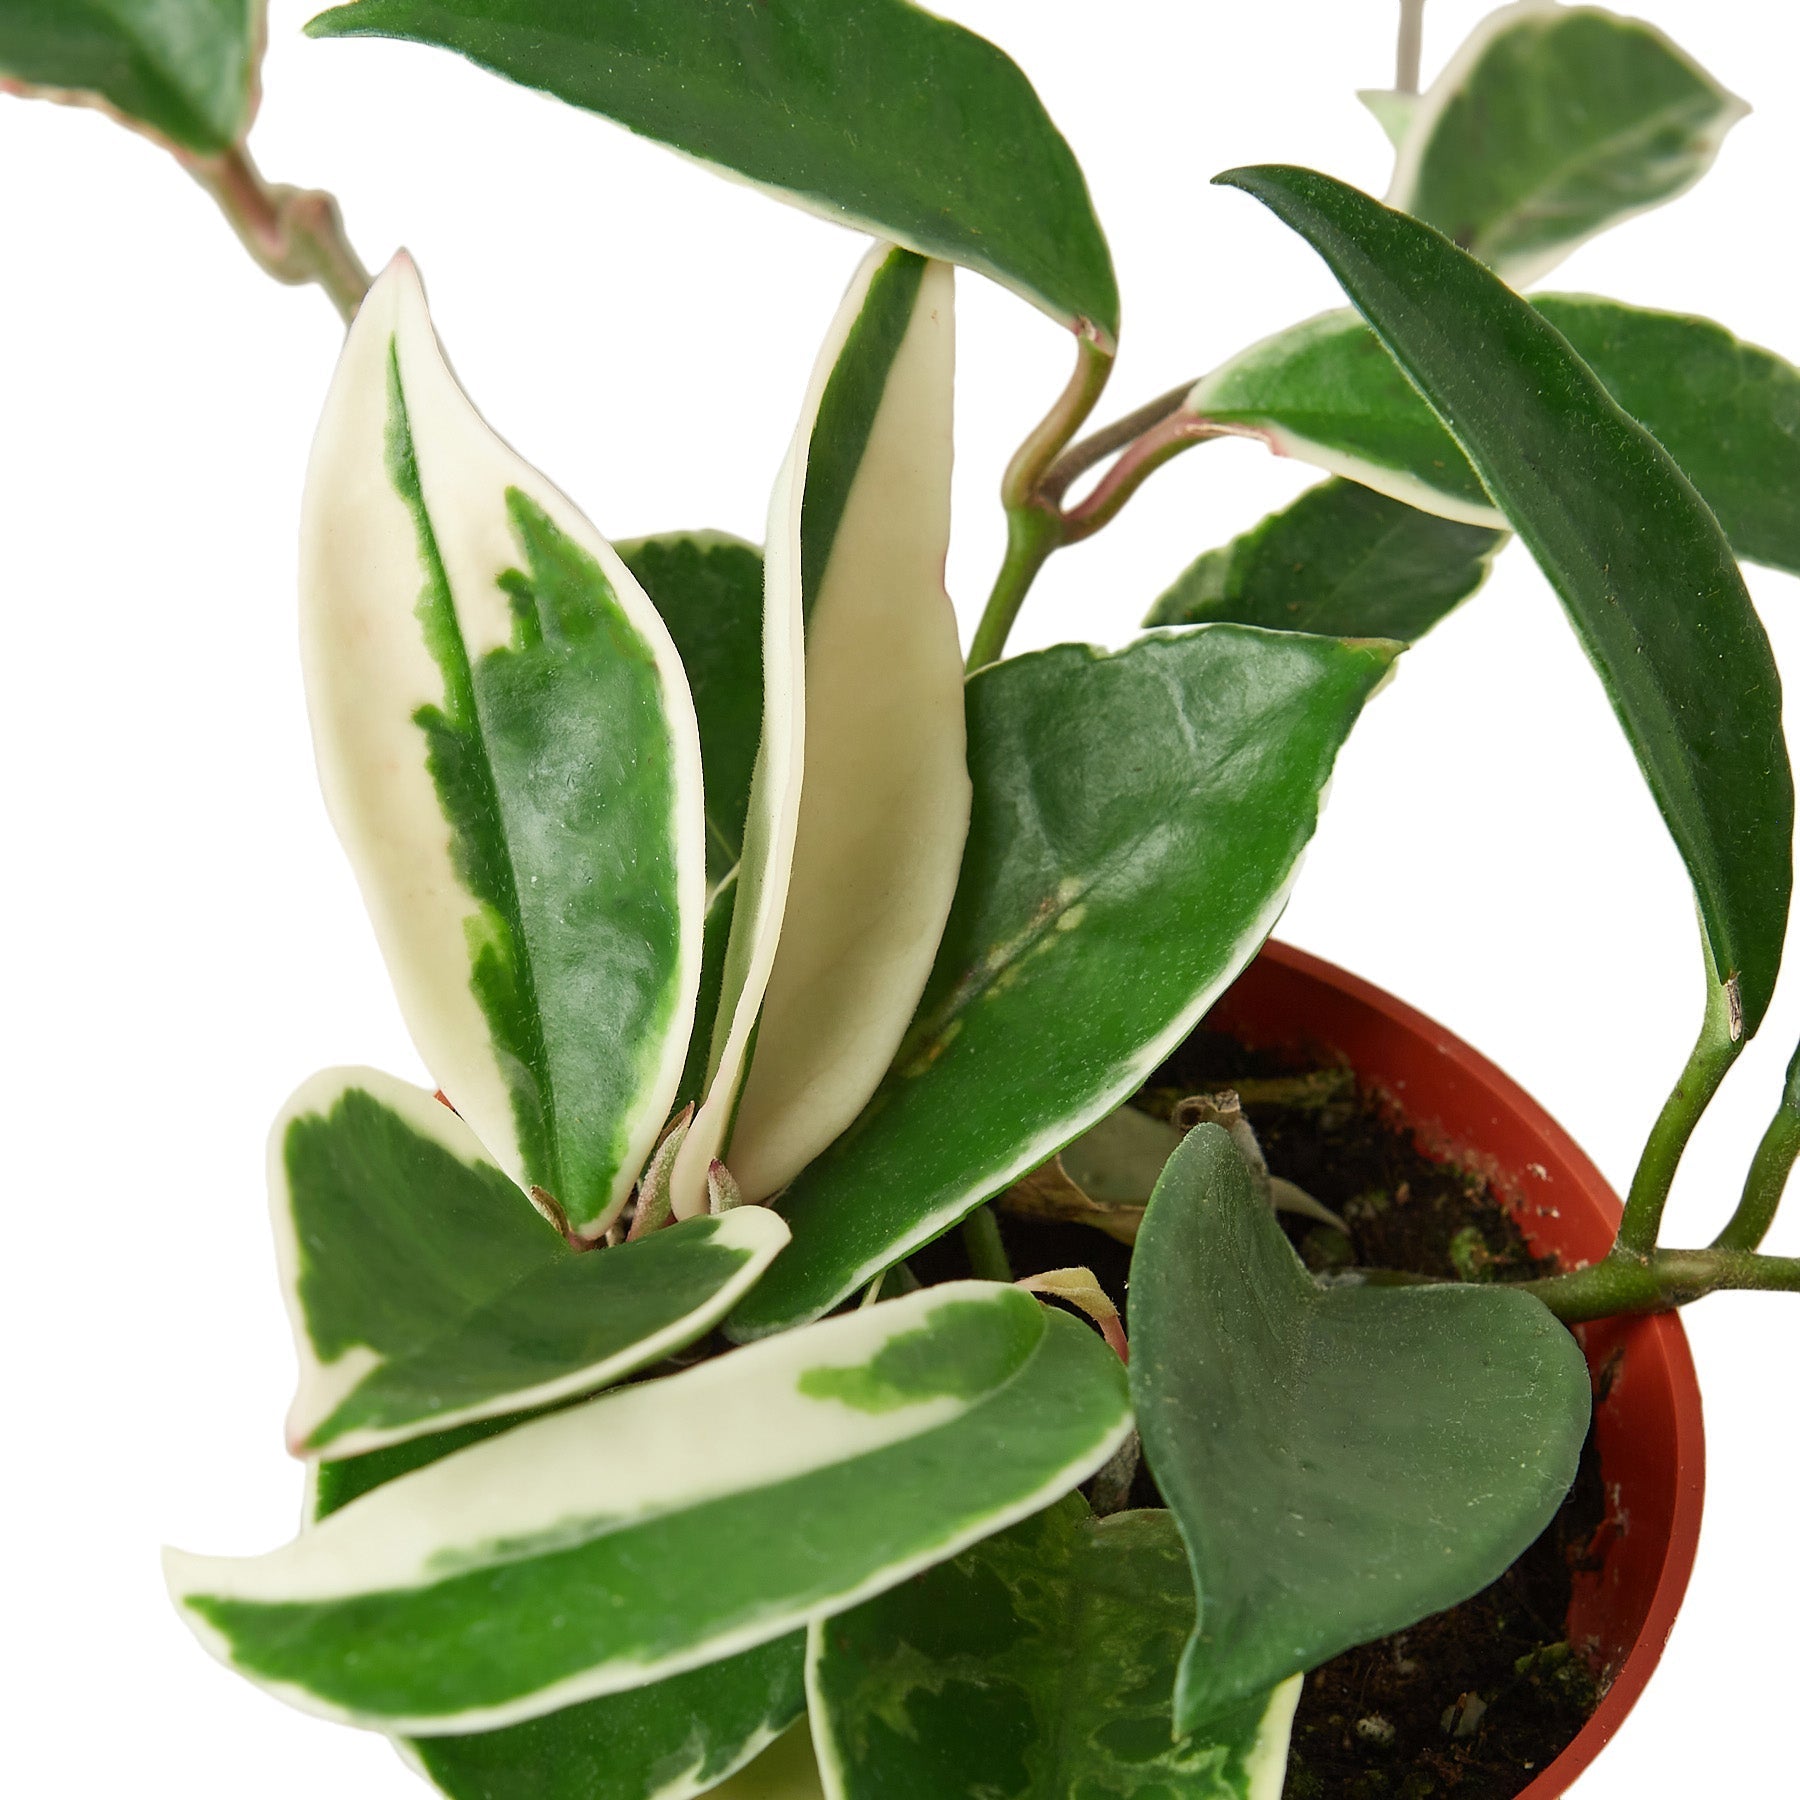 Hoya Carnosa 'Tricolor' - 6" Pot - NURSERY POT ONLY - One Beleaf Away Plant Studio